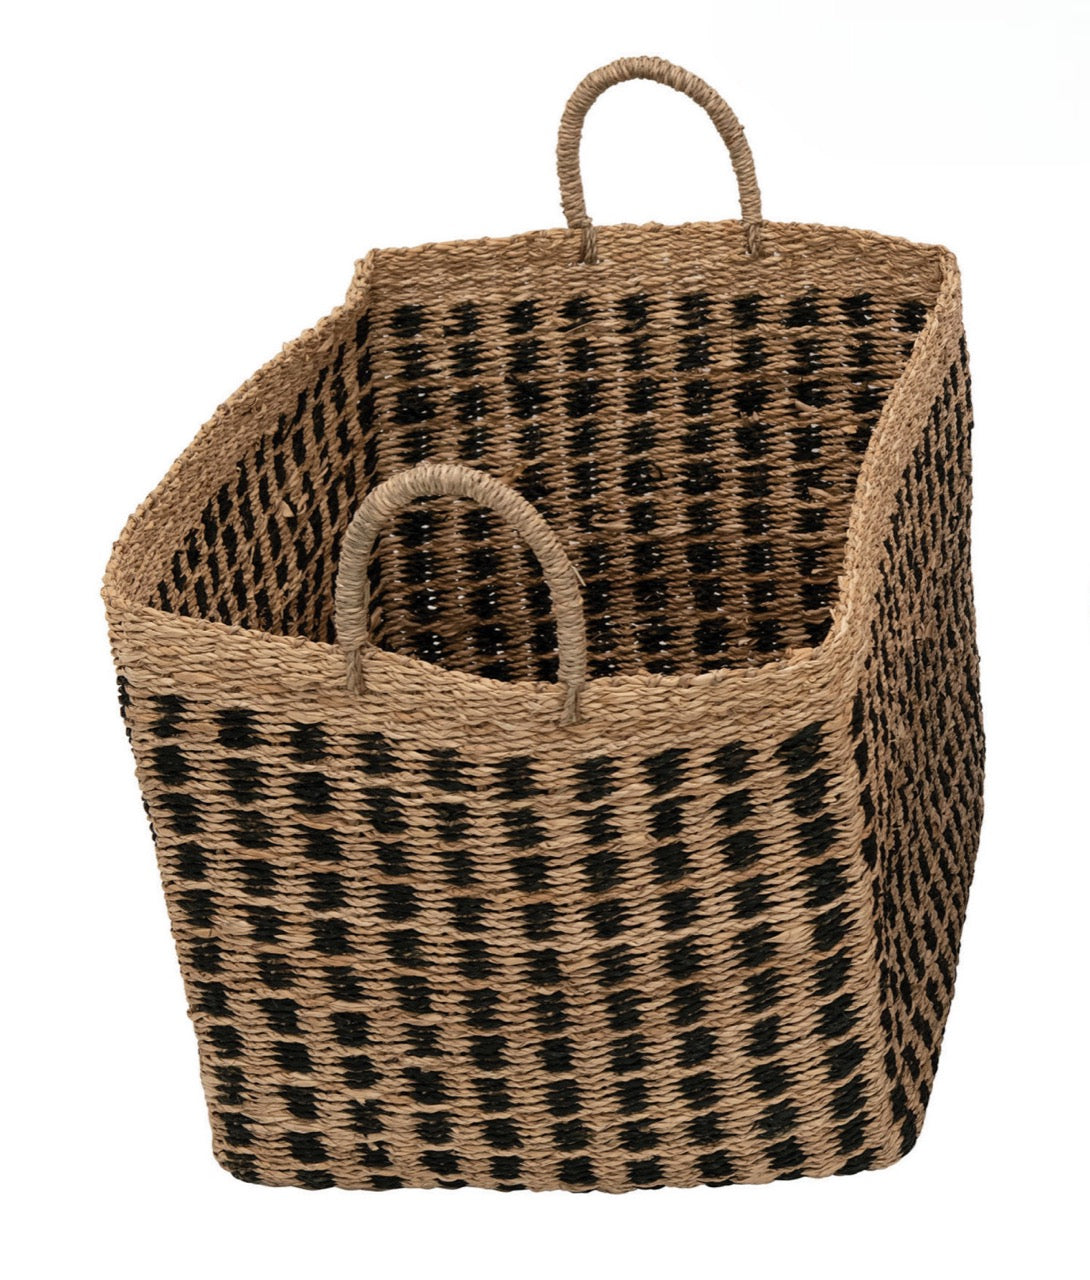 Hand-Woven Seagrass Basket w/ Handles - 21"